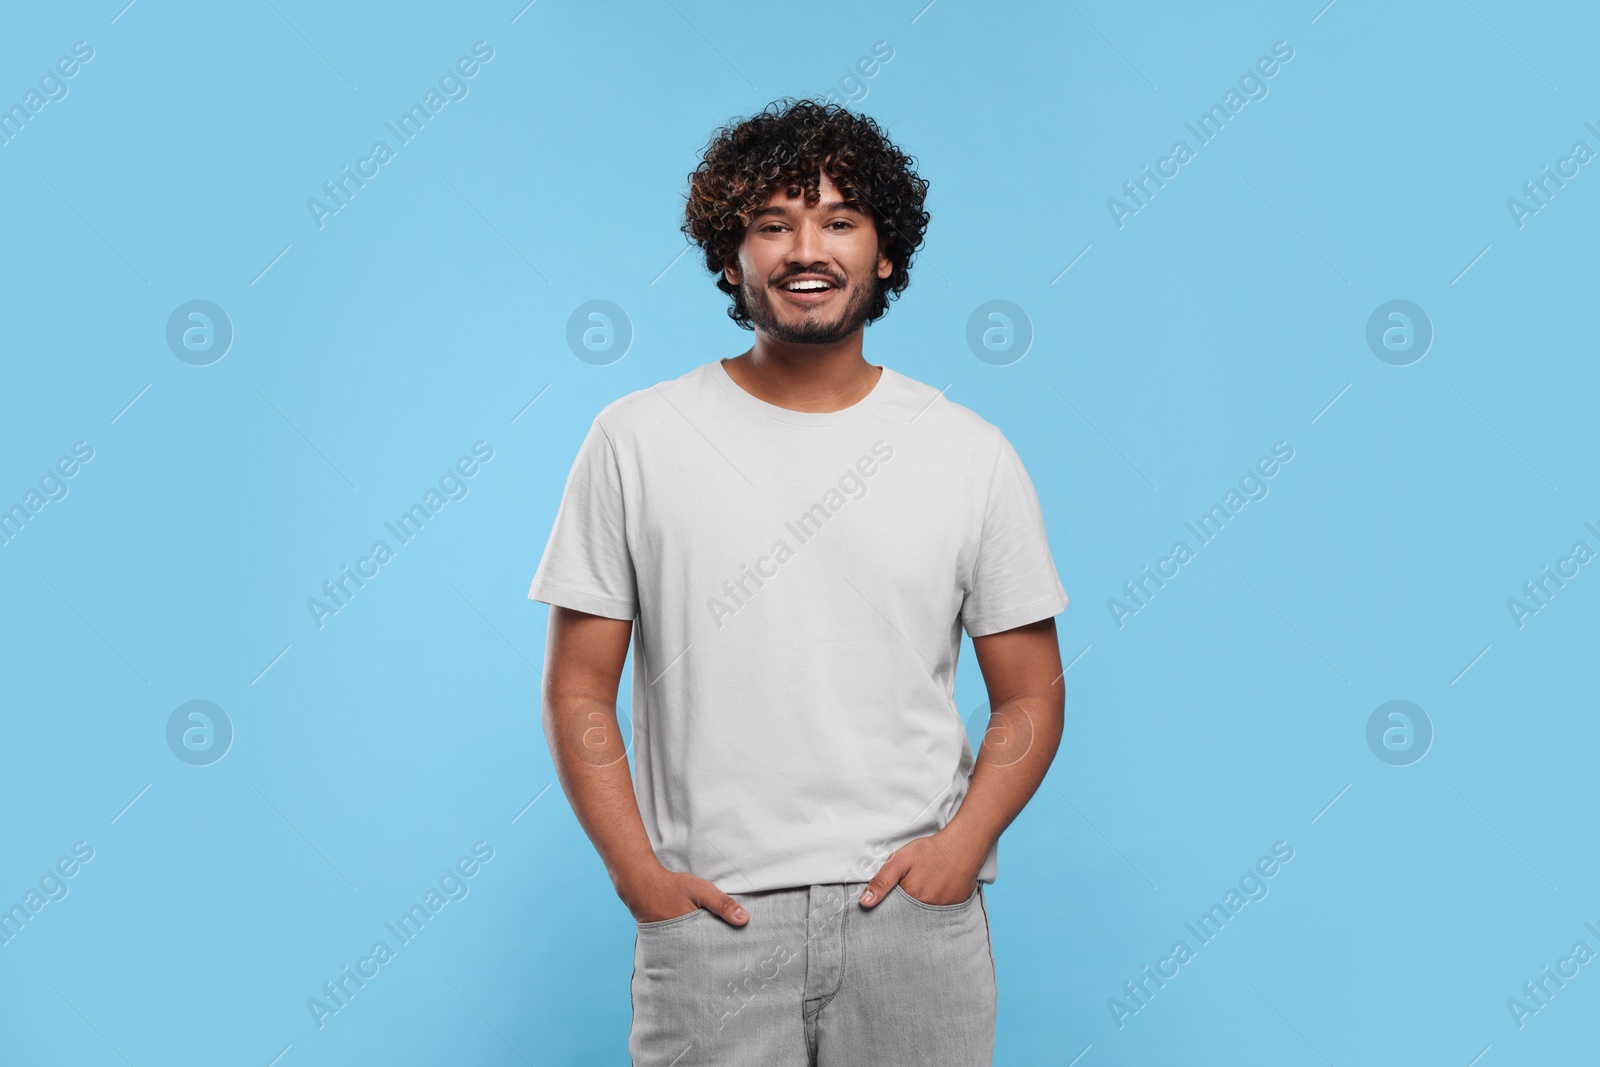 Photo of Handsome smiling man on light blue background